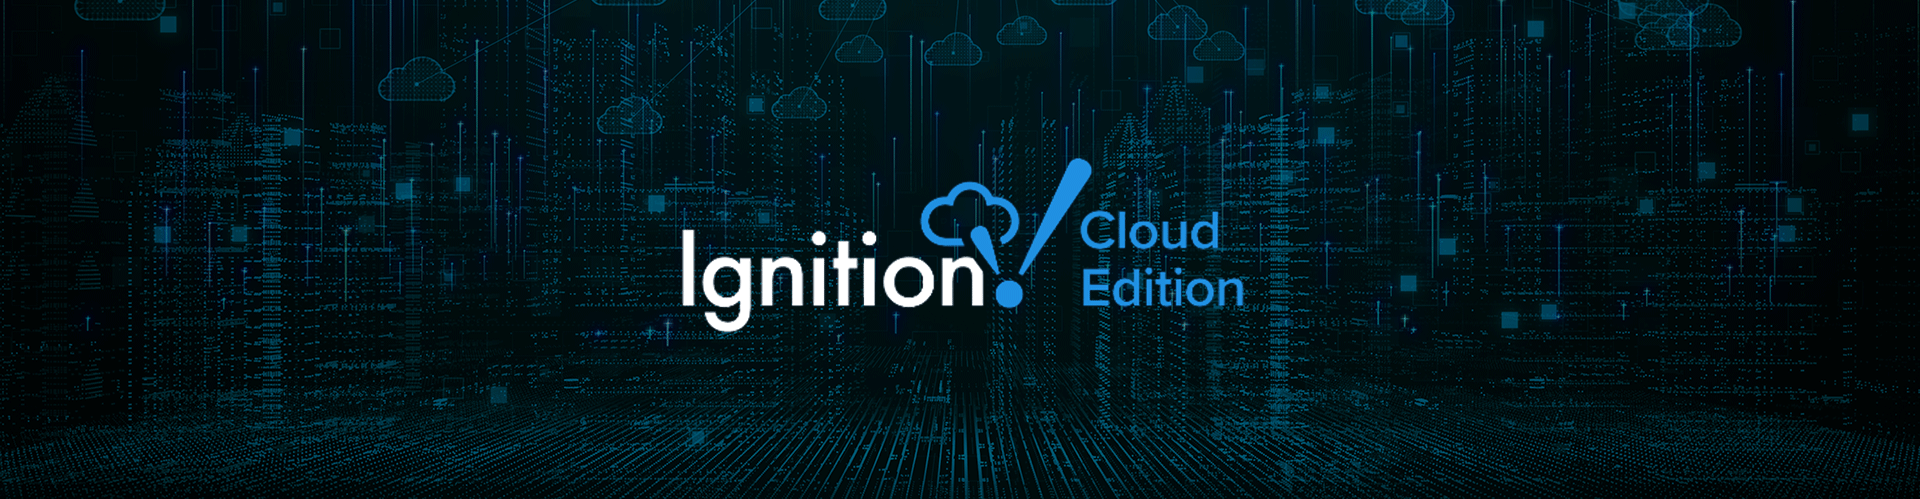 Ignition Cloud Edition Logo